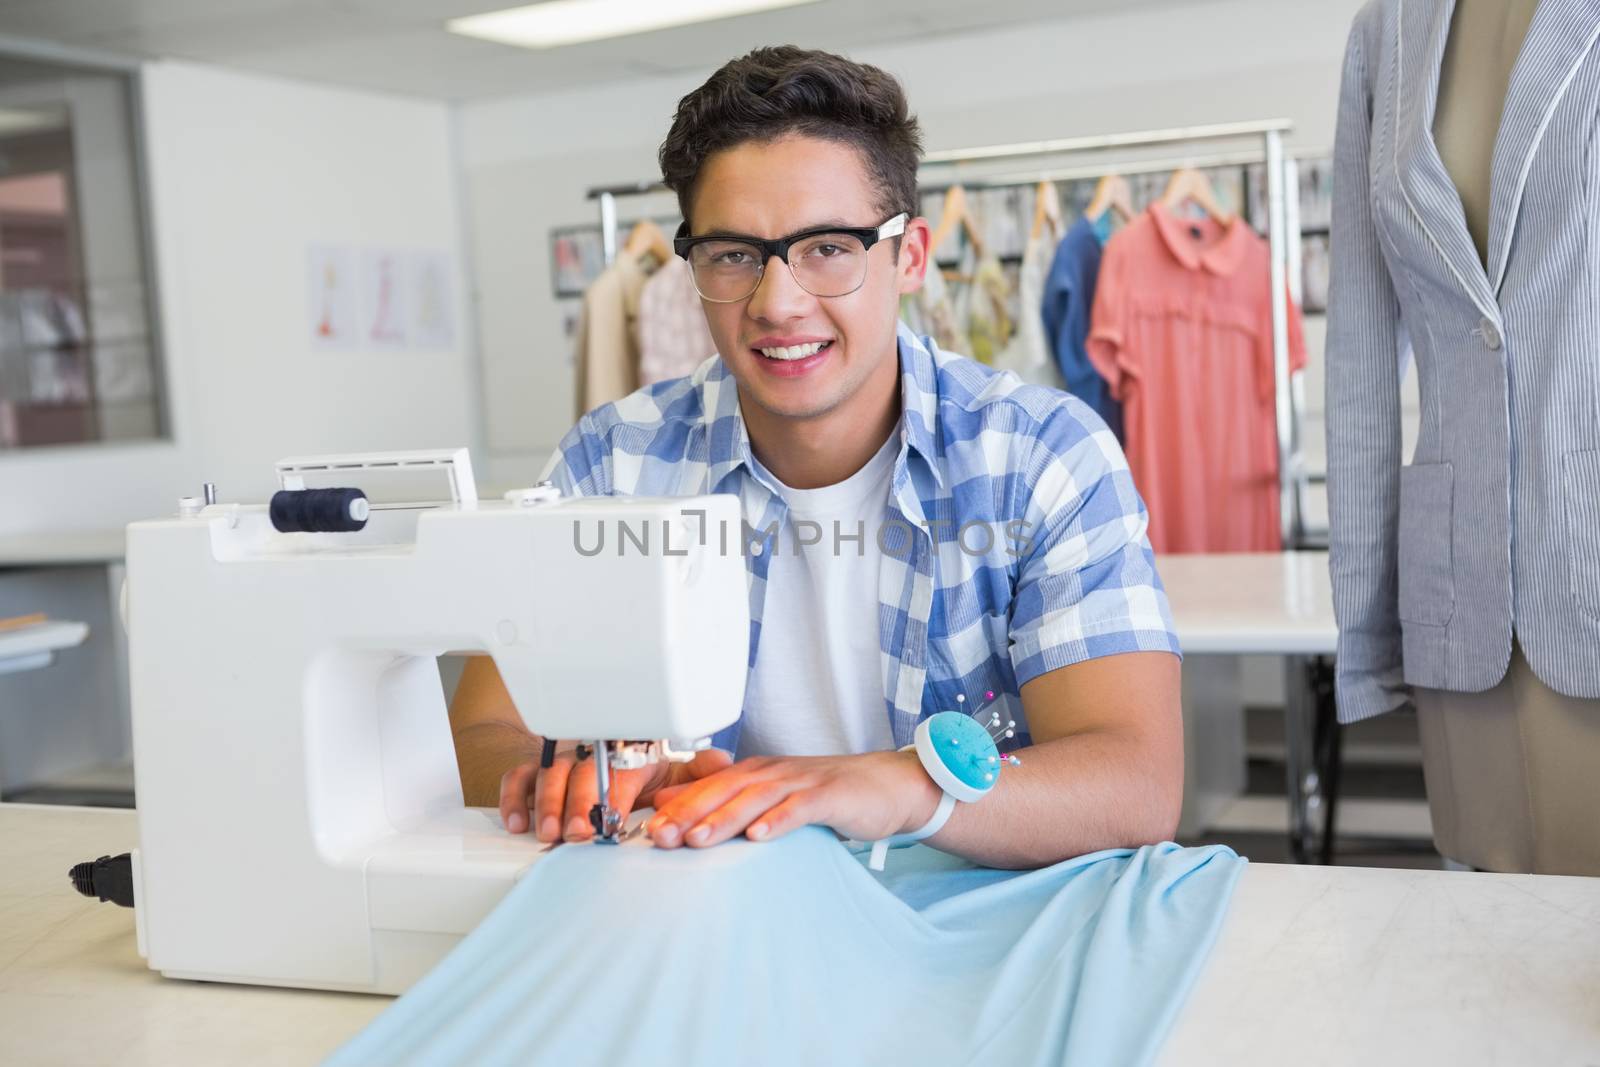 Fashion student using sewing machine by Wavebreakmedia